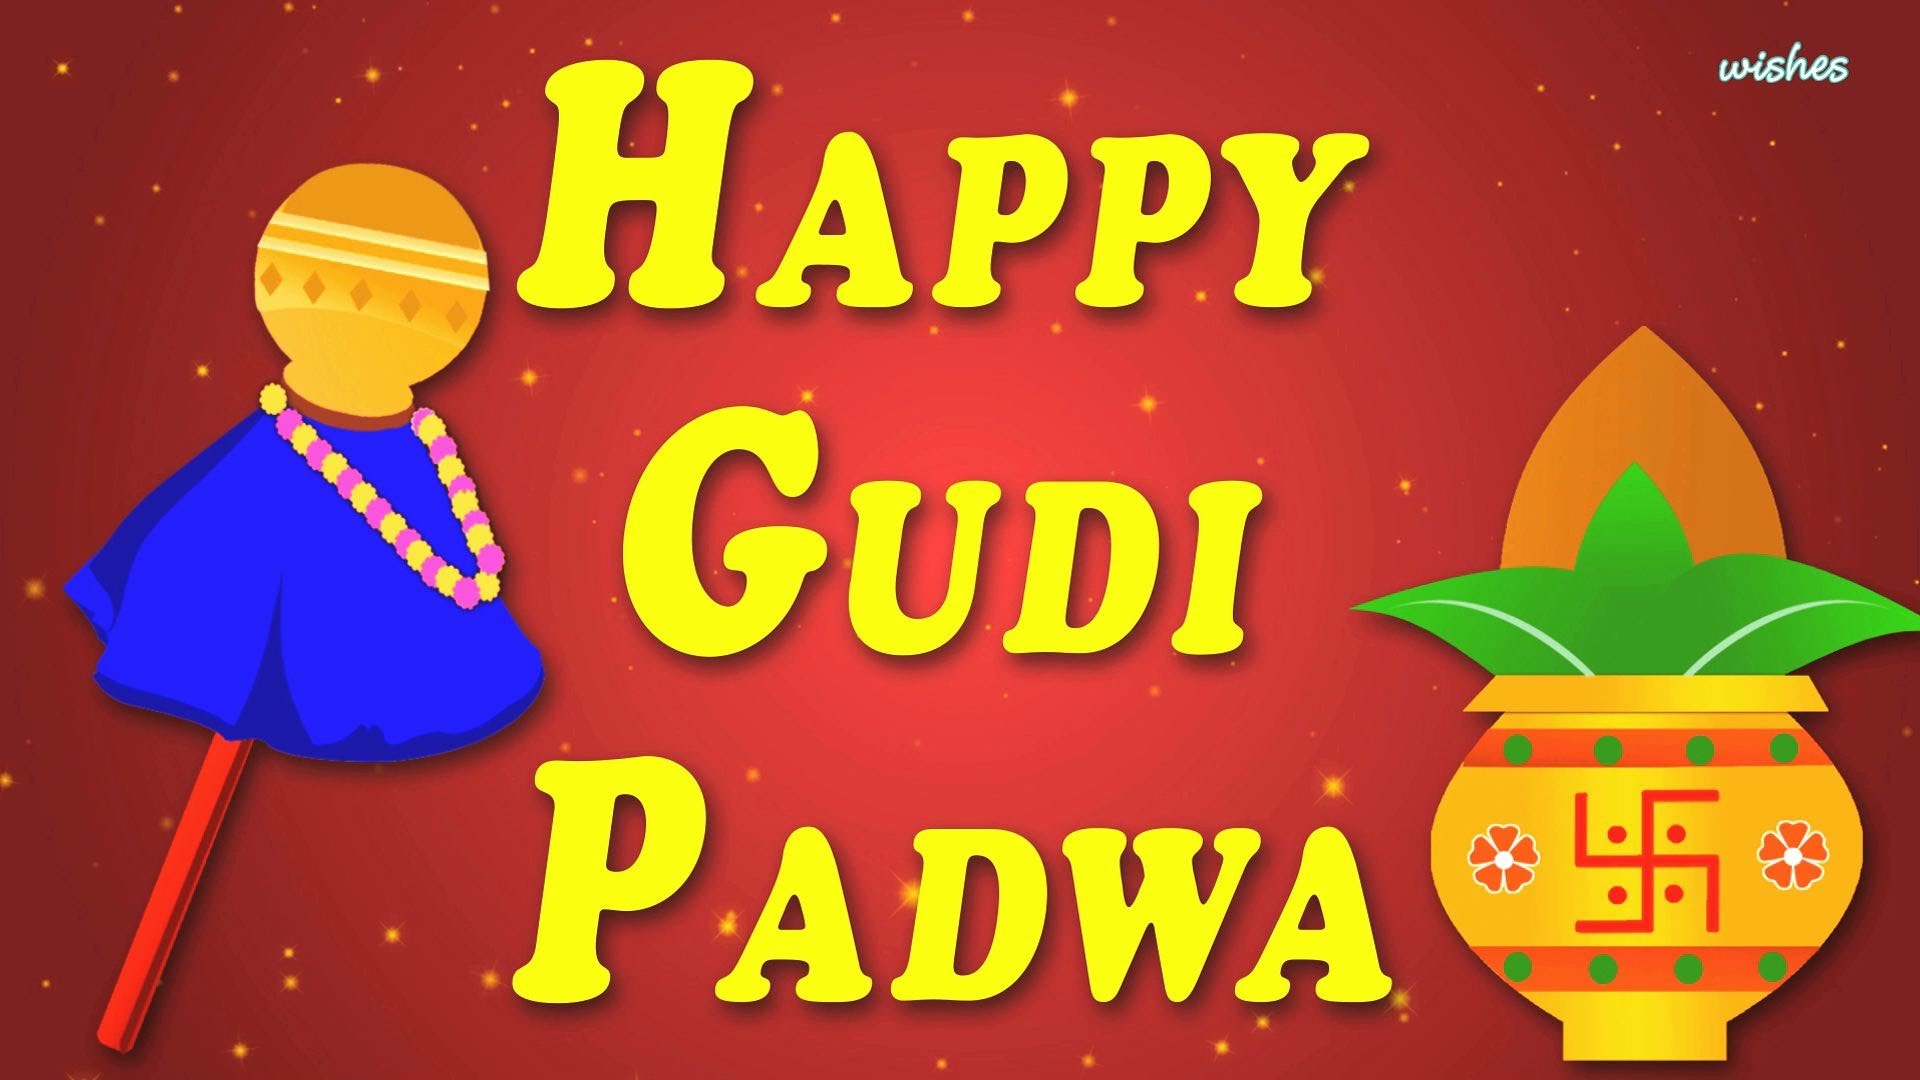 Gudi Padwa Images for Whatsapp DP, Profile Wallpapers – Free Download